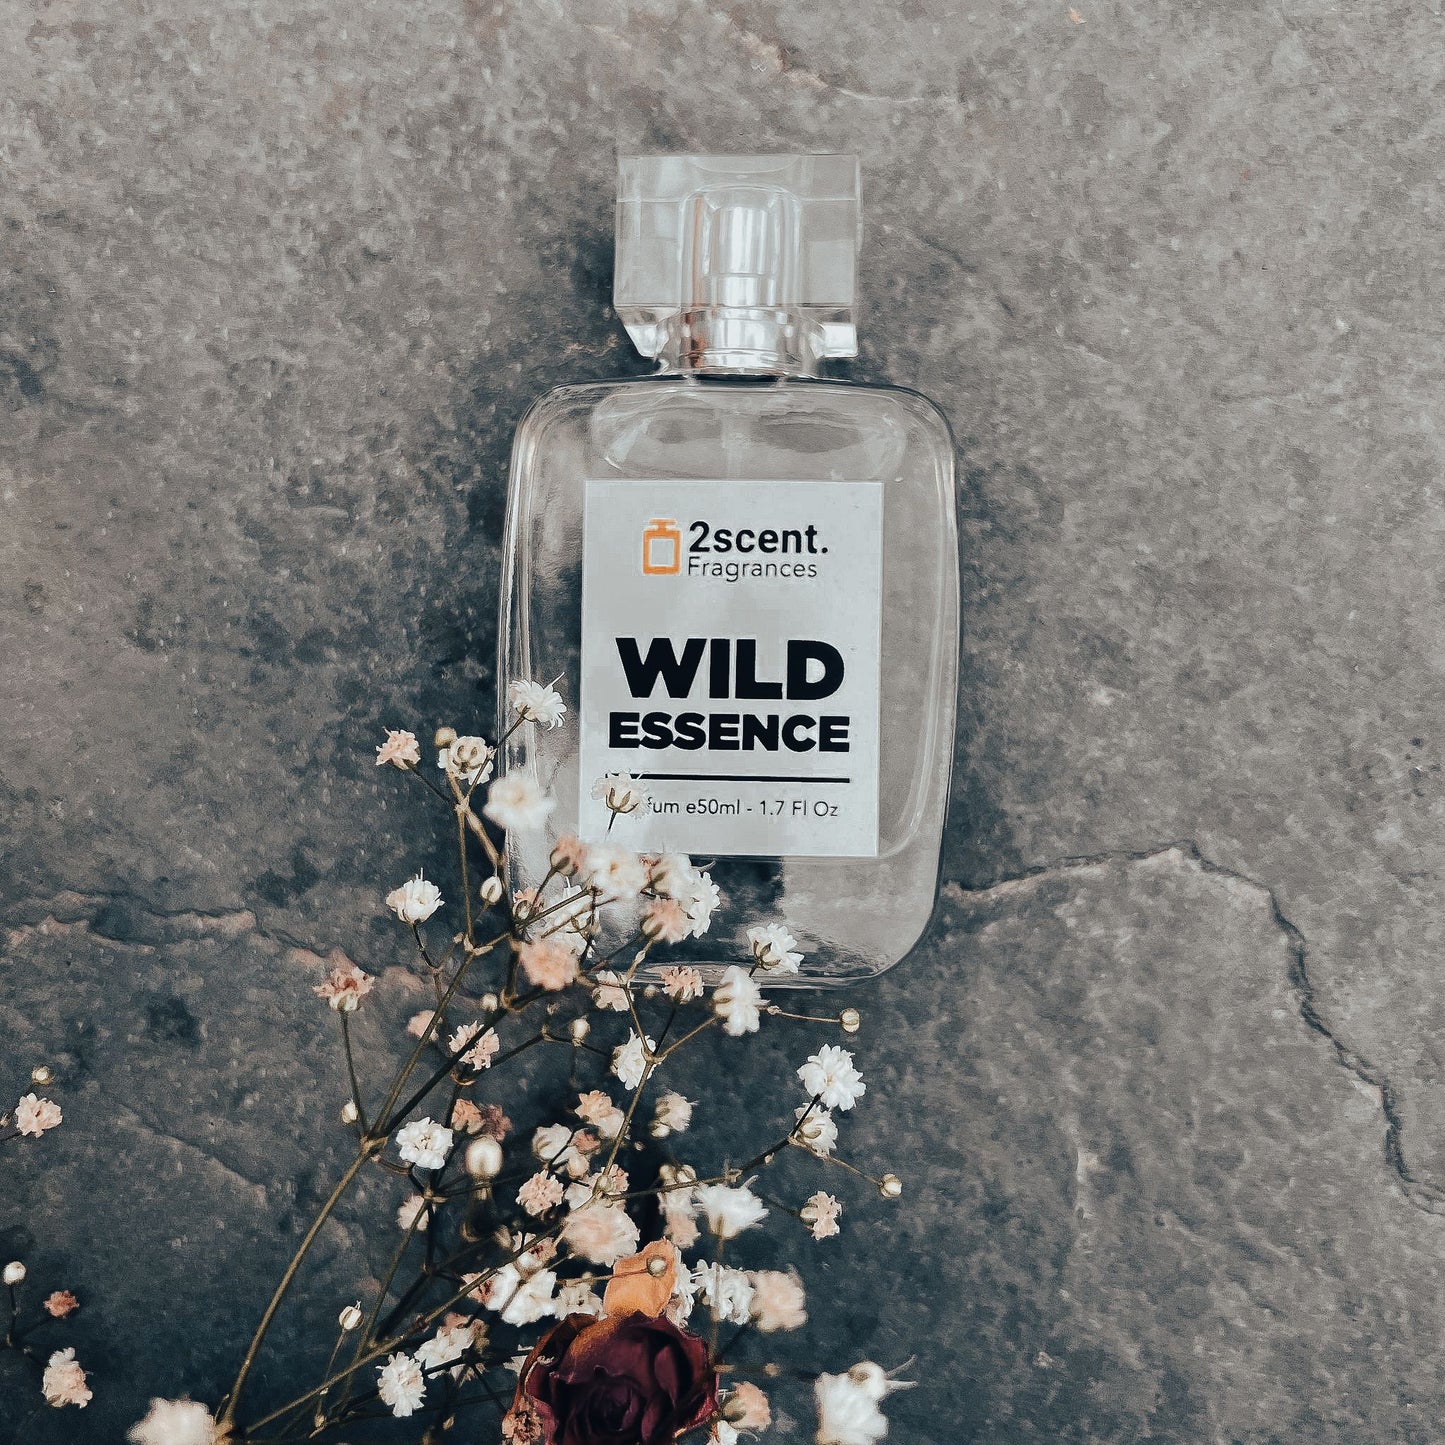 2Scent Wild Essence - Alternative to Sauvage